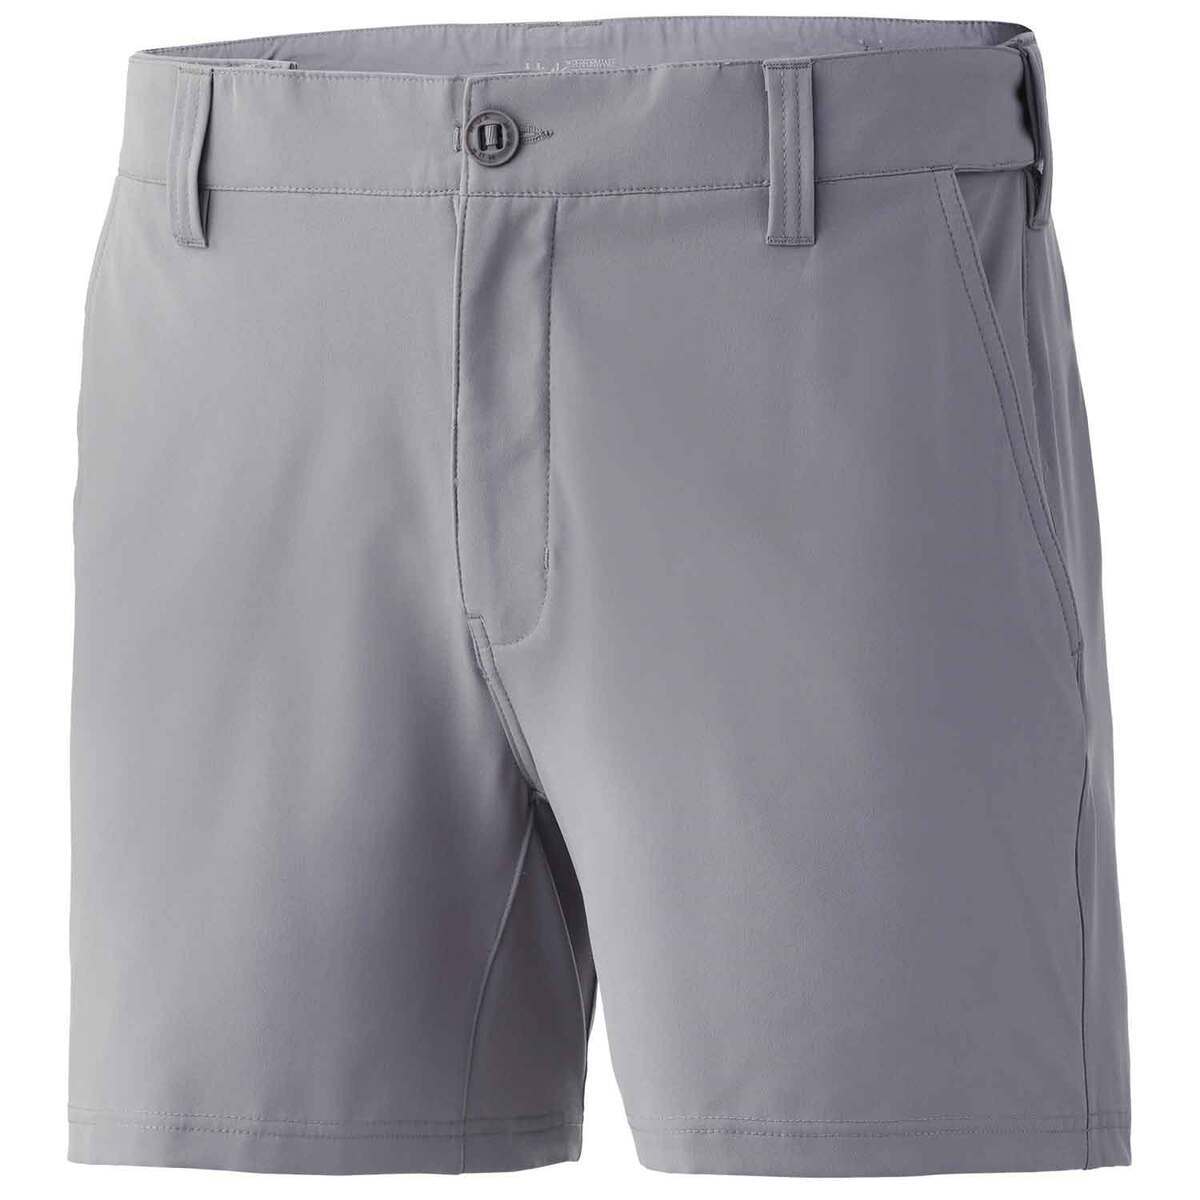 Huk Men's Pursuit Fishing Shorts - Overcast Grey - 3XL